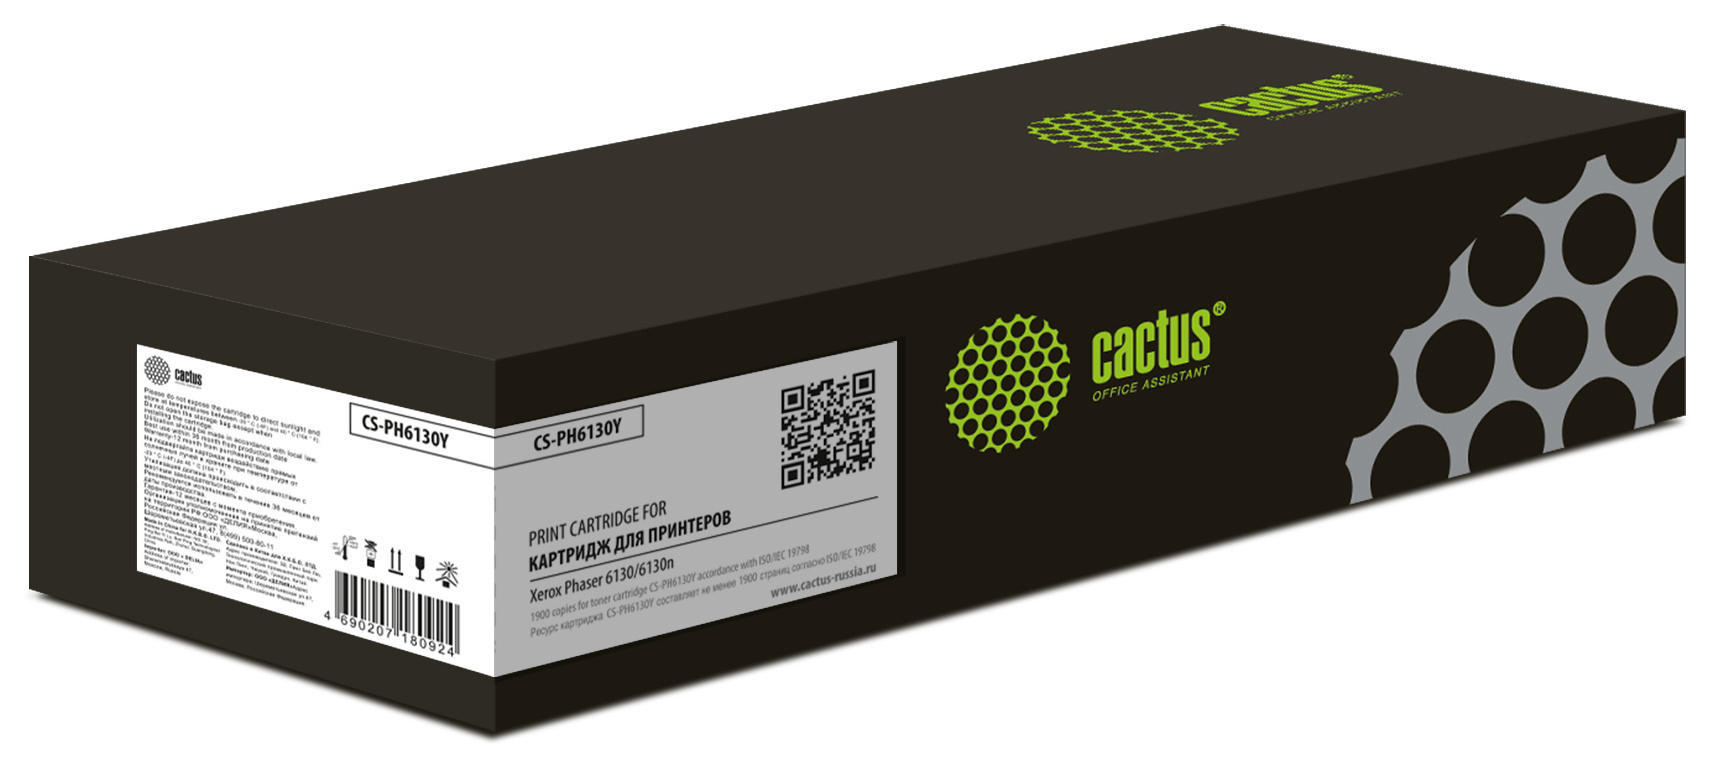 фото: Картридж лазерный Cactus CS-PH6130Y 106R01284 желтый (1900стр.) для Xerox Phaser 6130/6130n